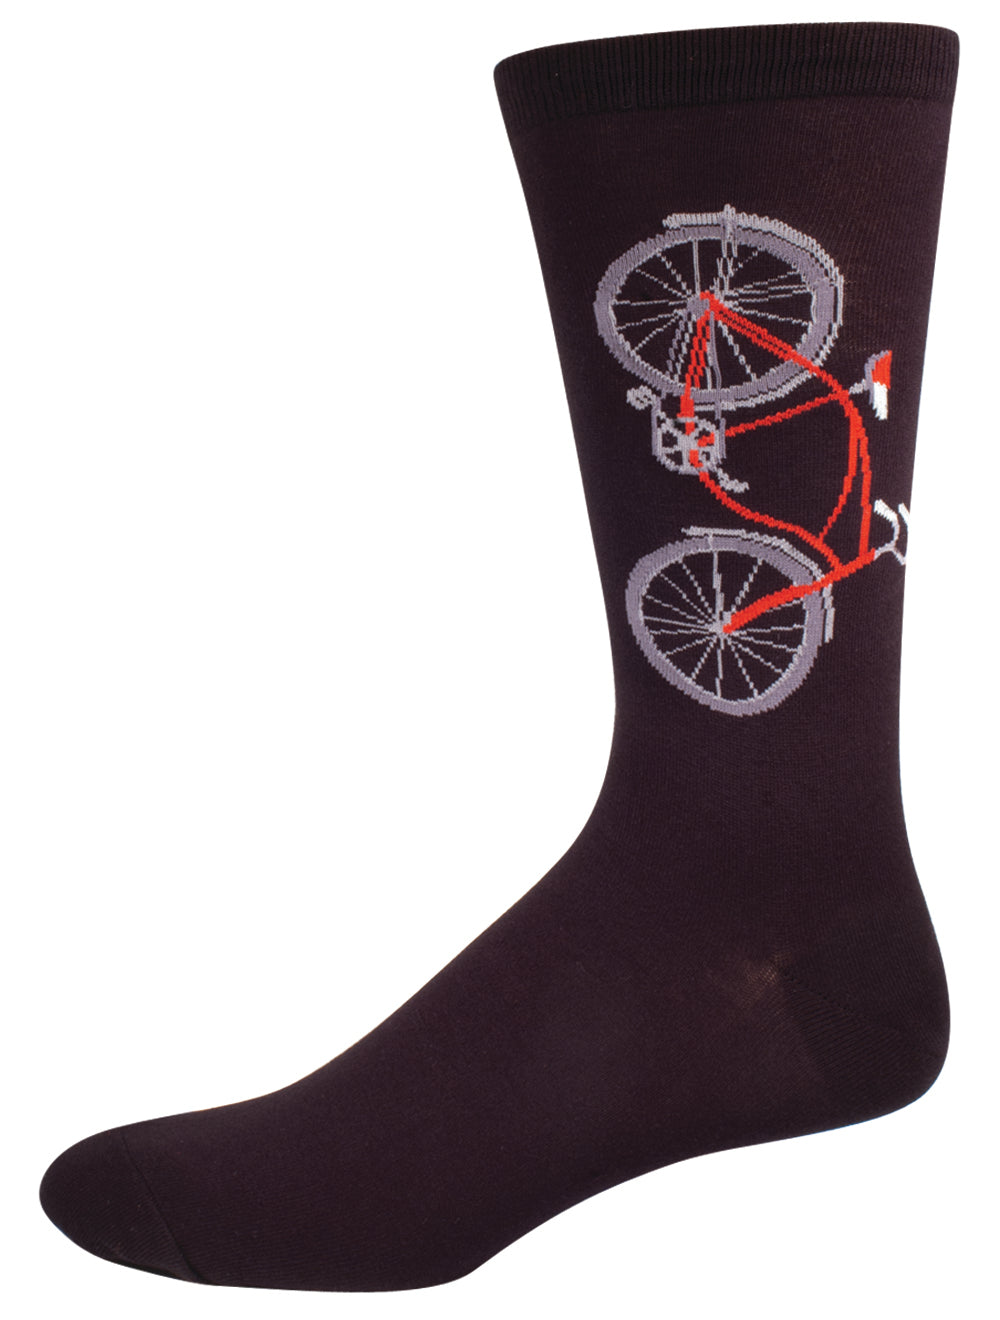 Men's Black Cycling Socks - Black with Red Bike